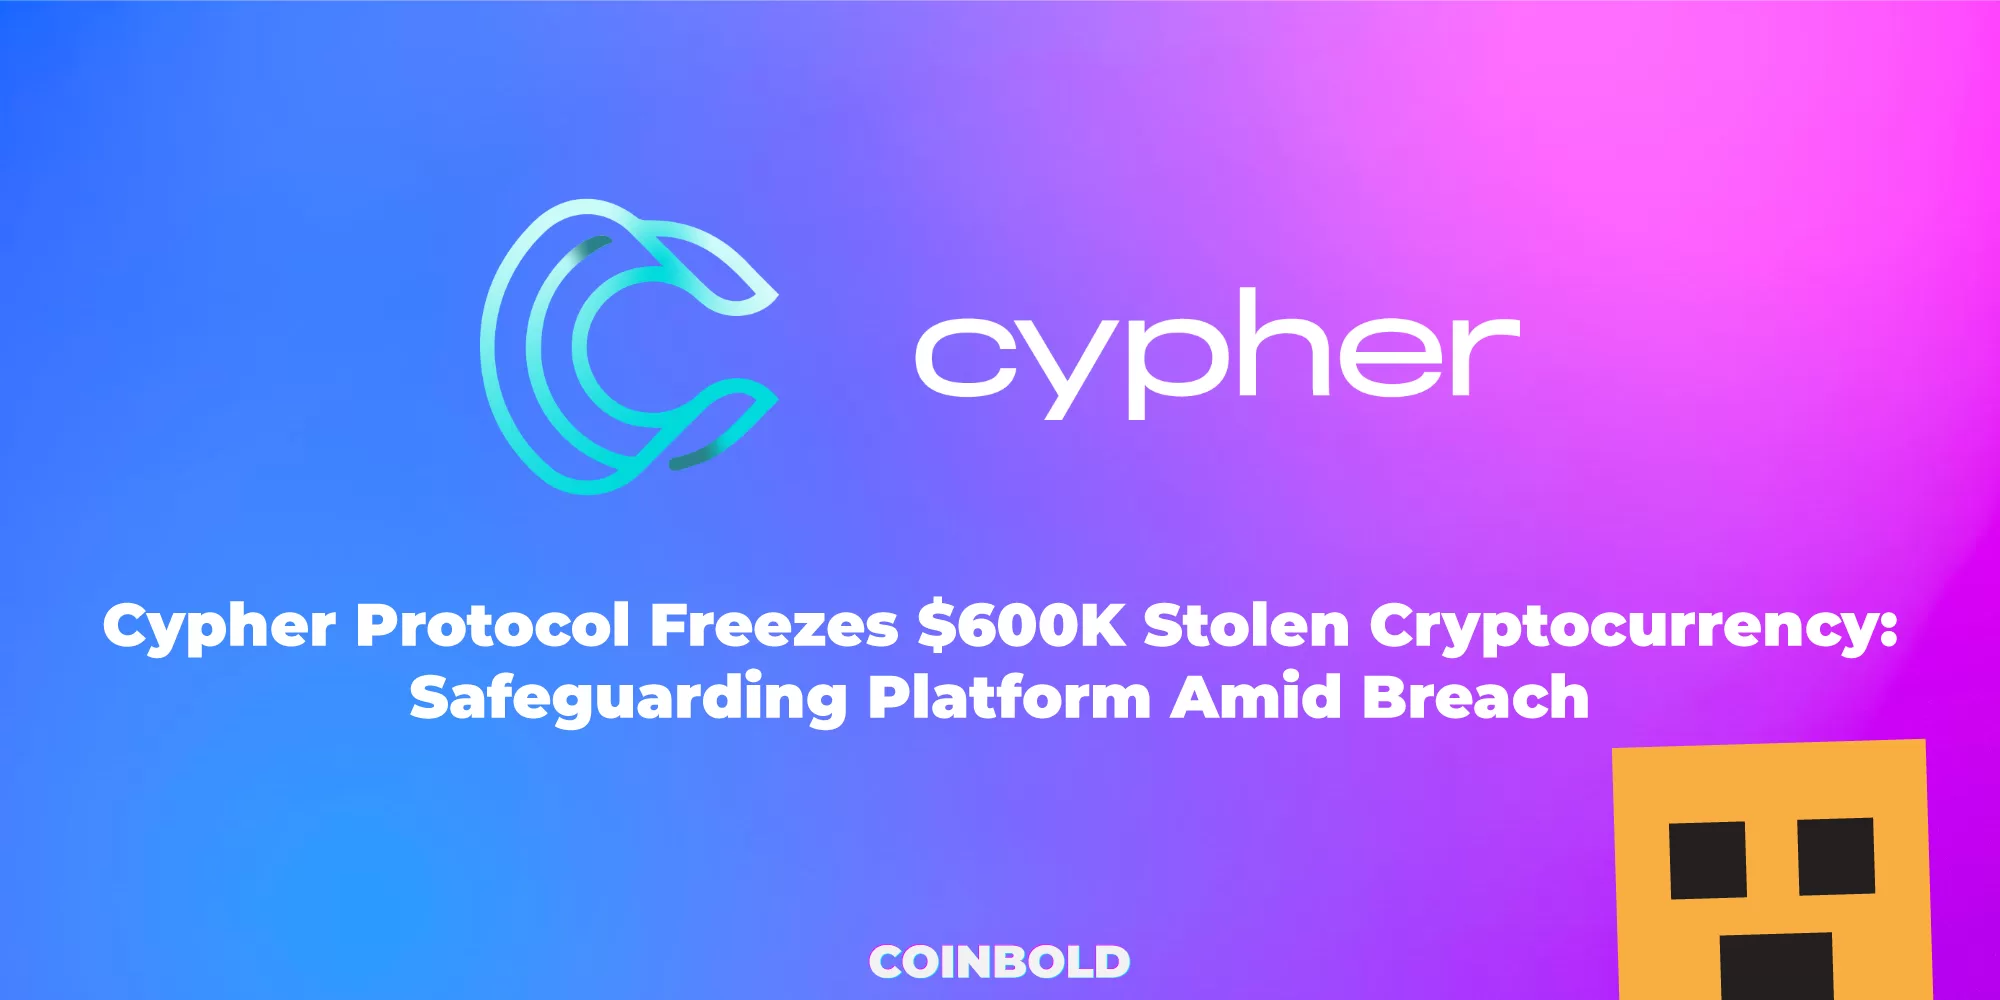 Cypher Protocol Freezes $600K Stolen Cryptocurrency Safeguarding Platform Amid Breach